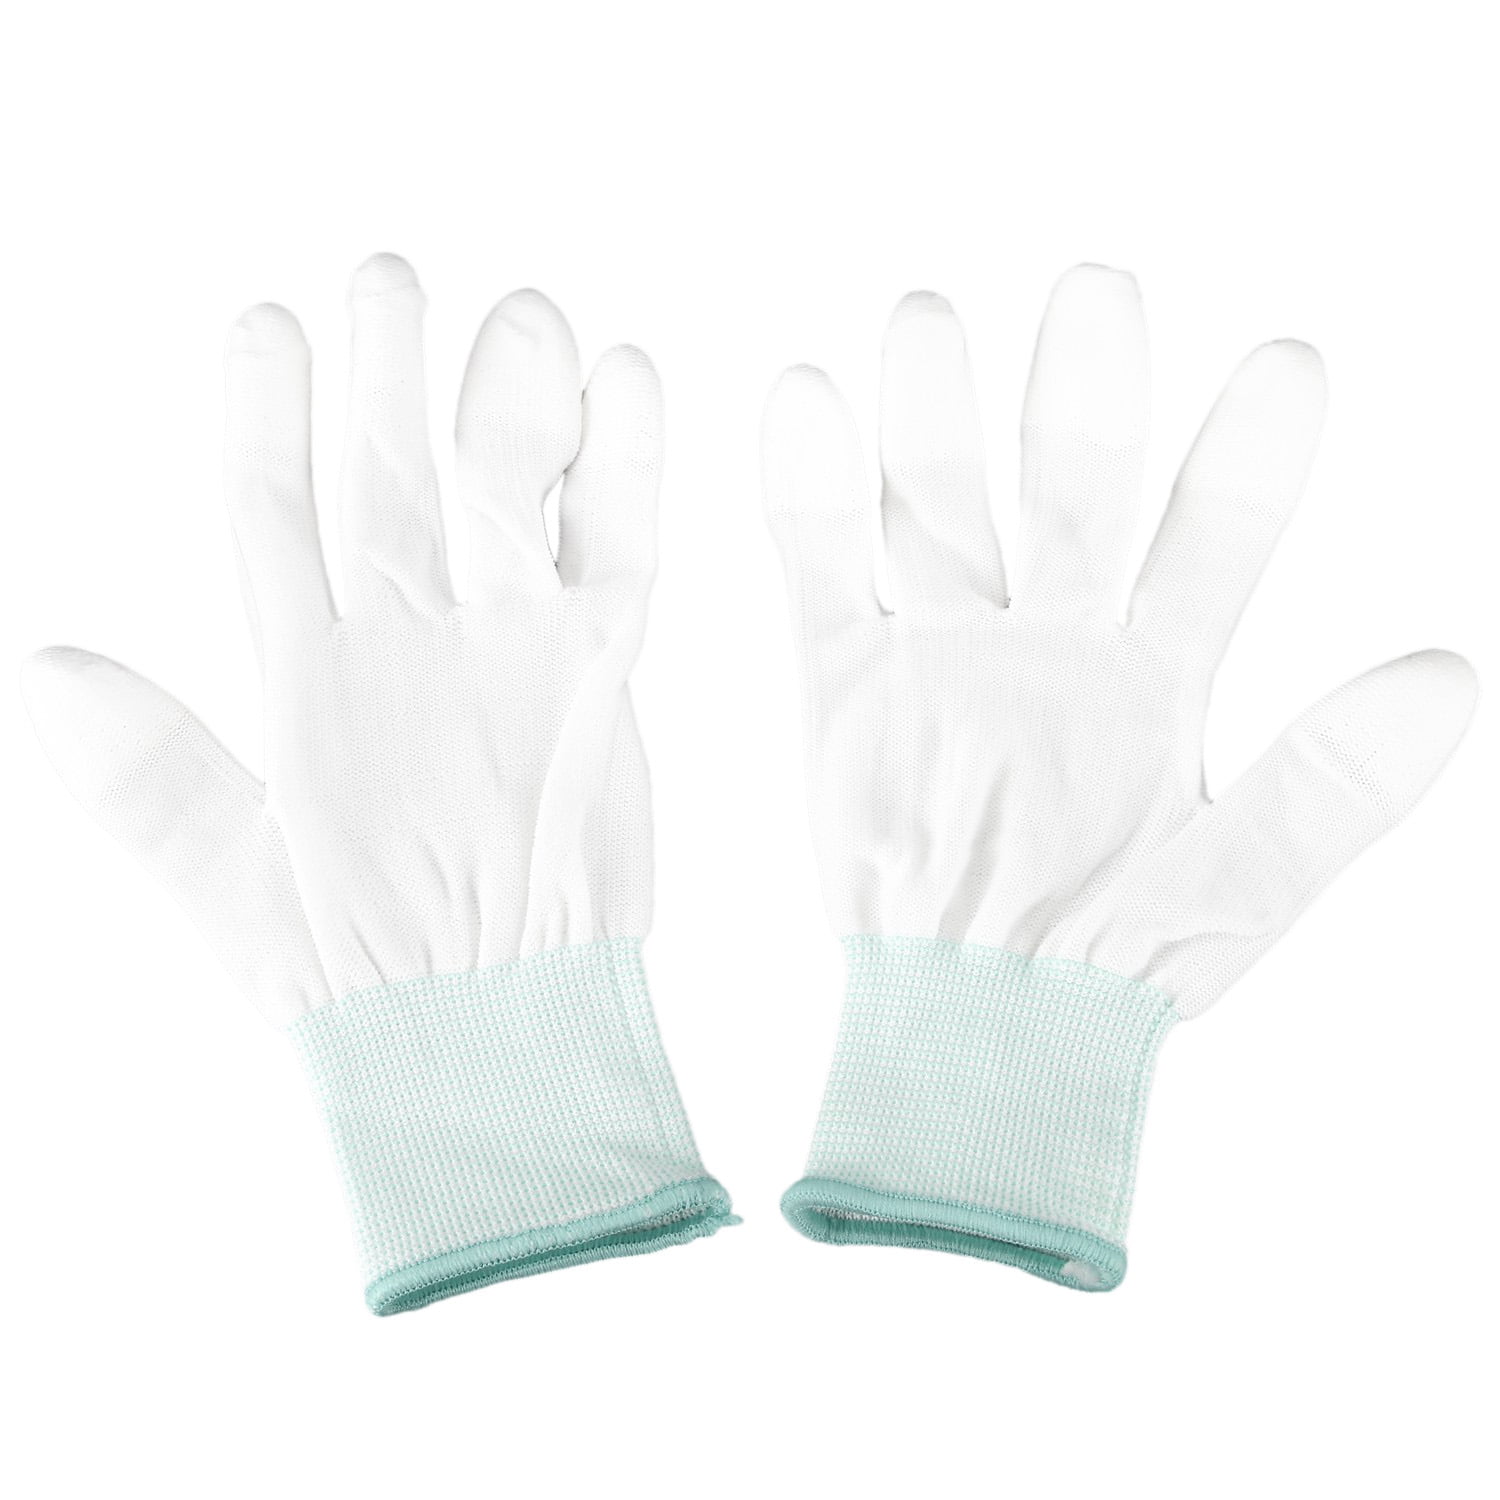 PAIR Non Slip Anti Static ESD Gloves with Textured Palms - Medium 